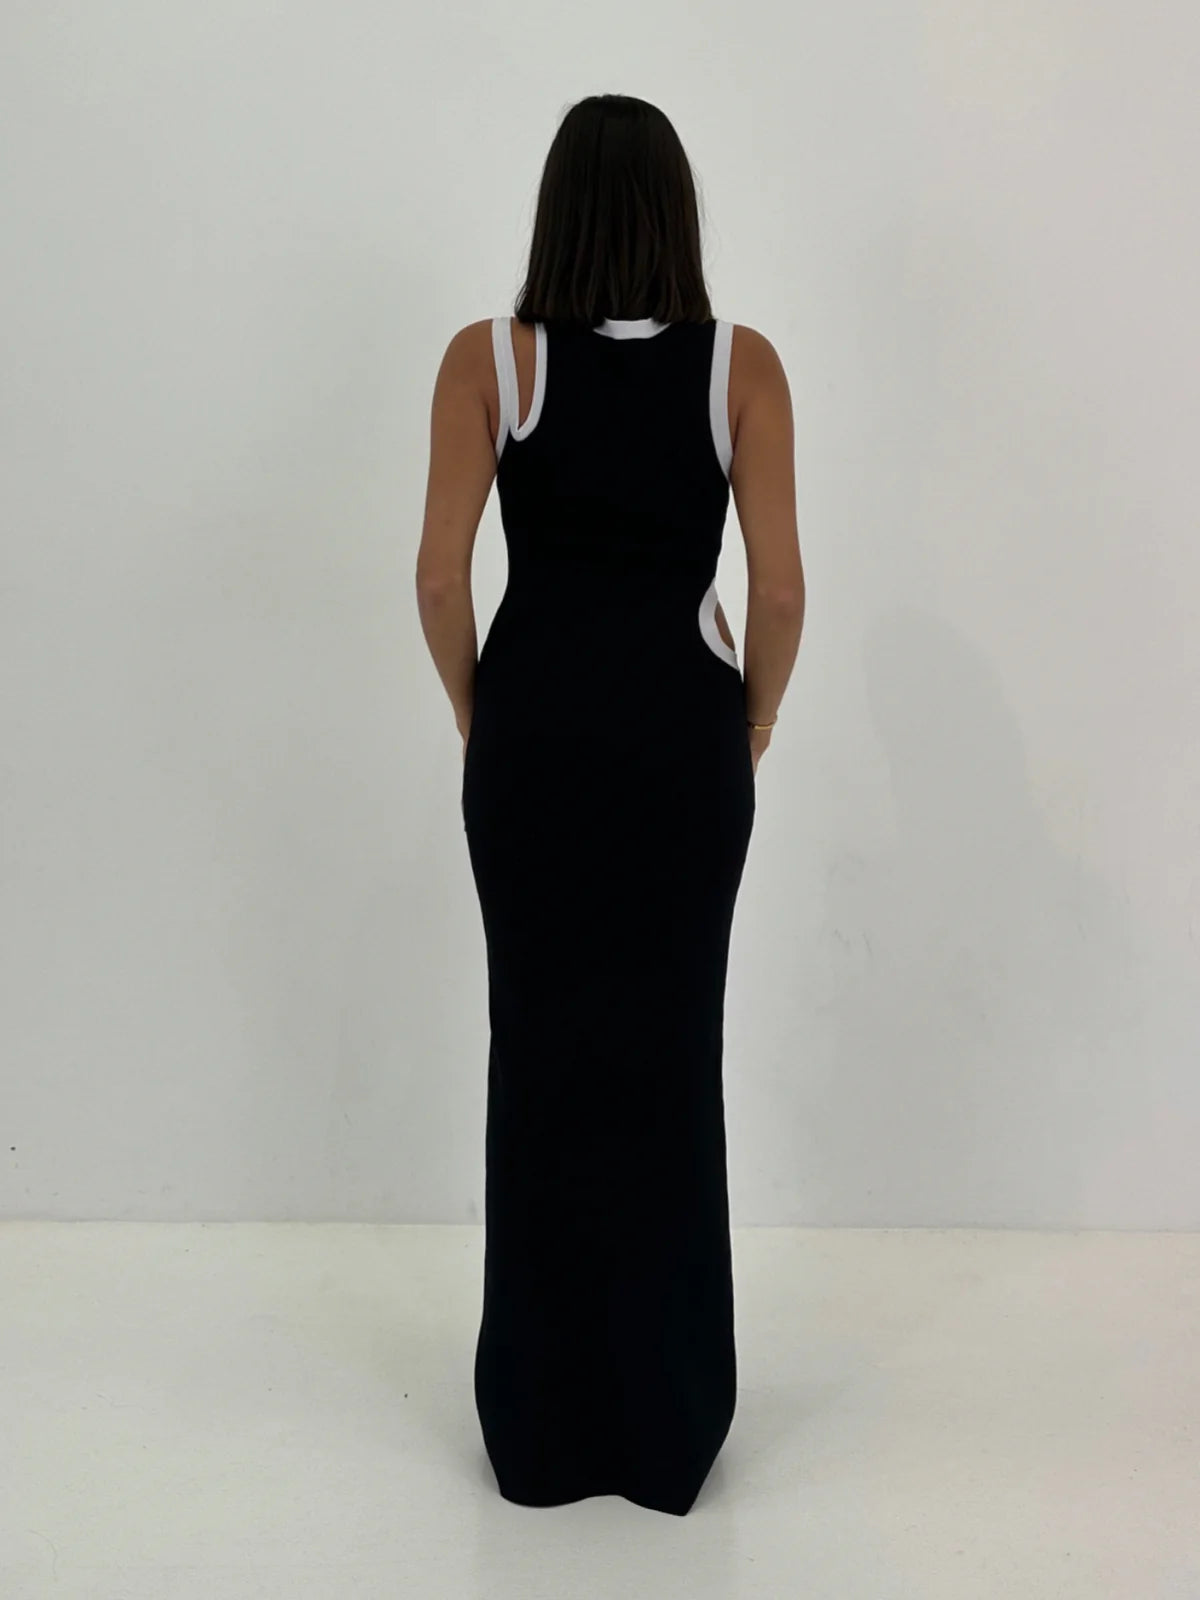 Evalina Dress Black XS - FOR SALE